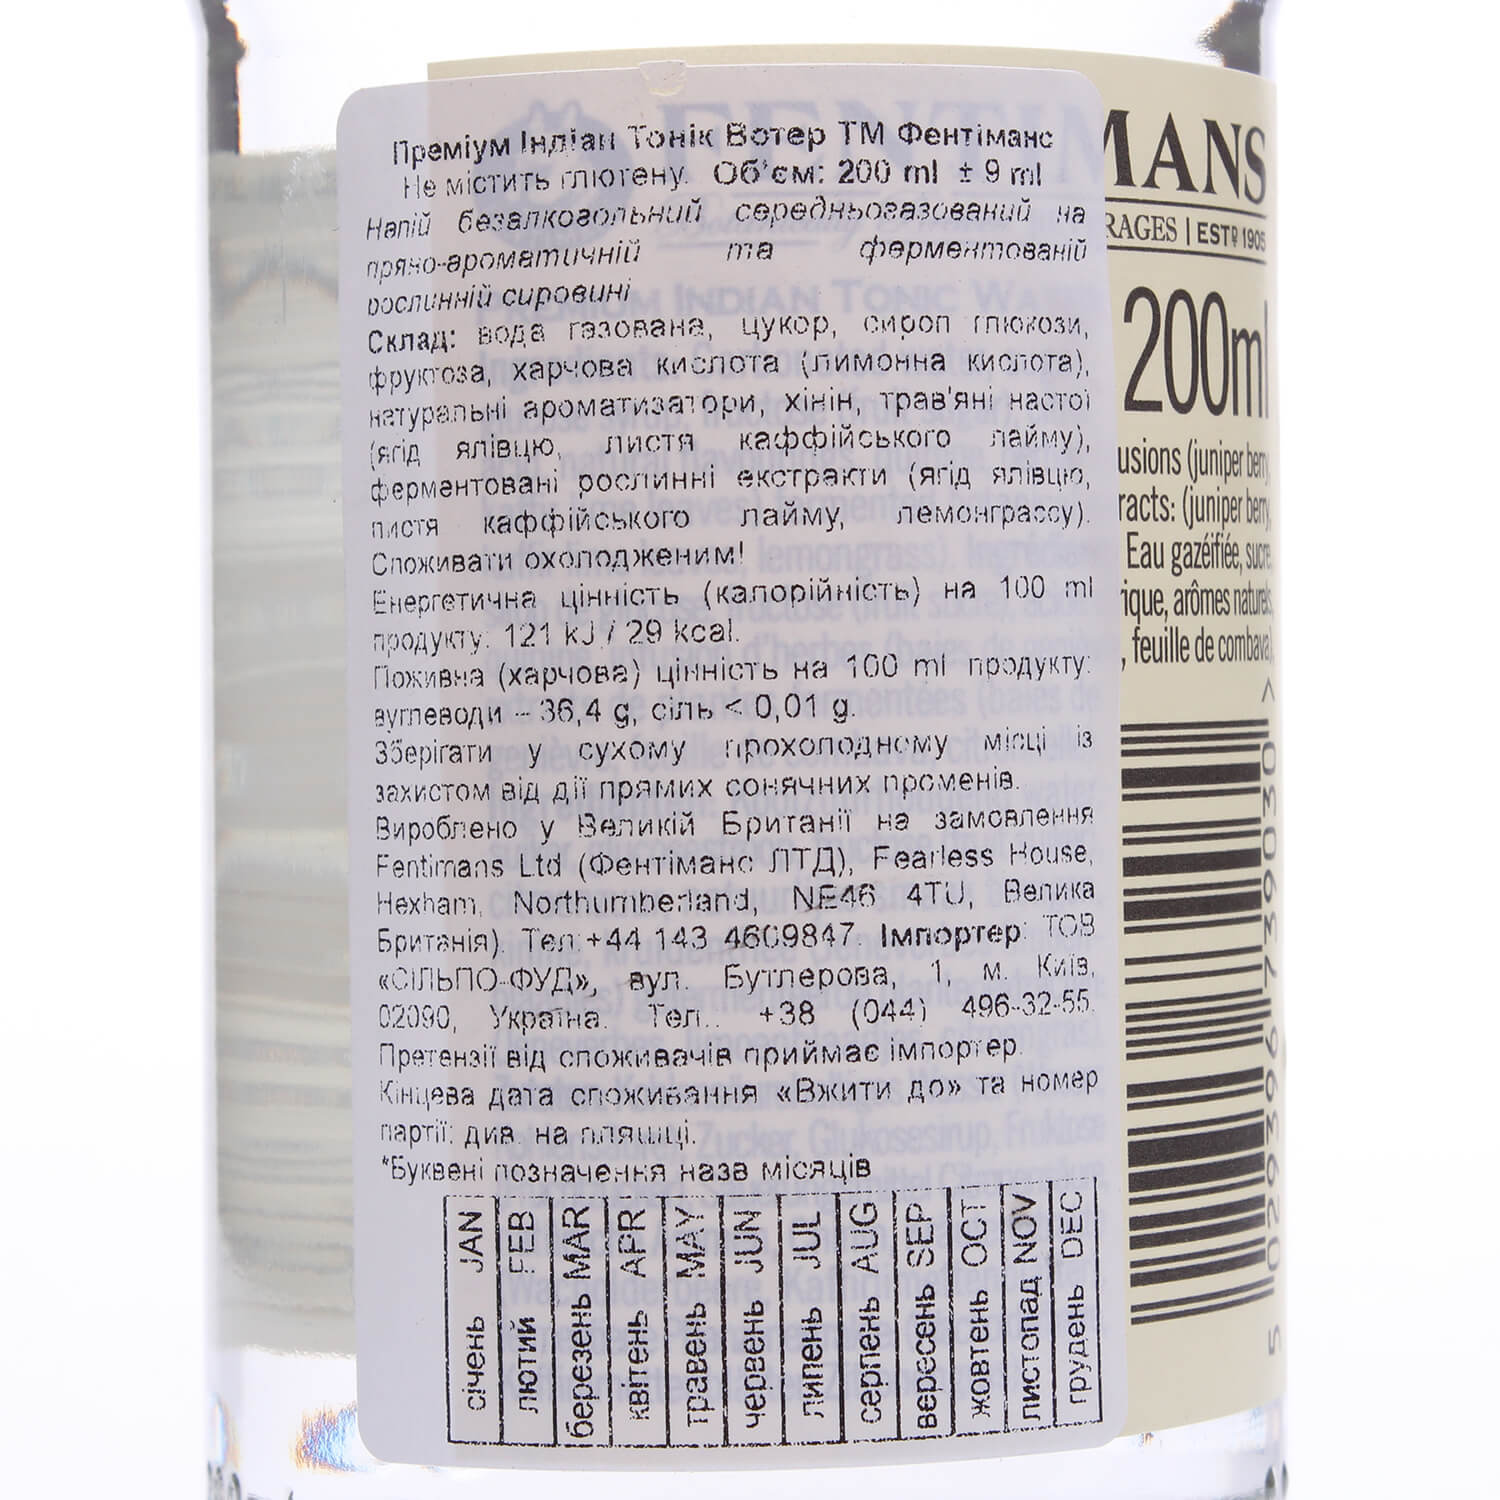 Напій Fentimans Premium Indian Tonic Water безалкогольний 200 мл (799377) - фото 3